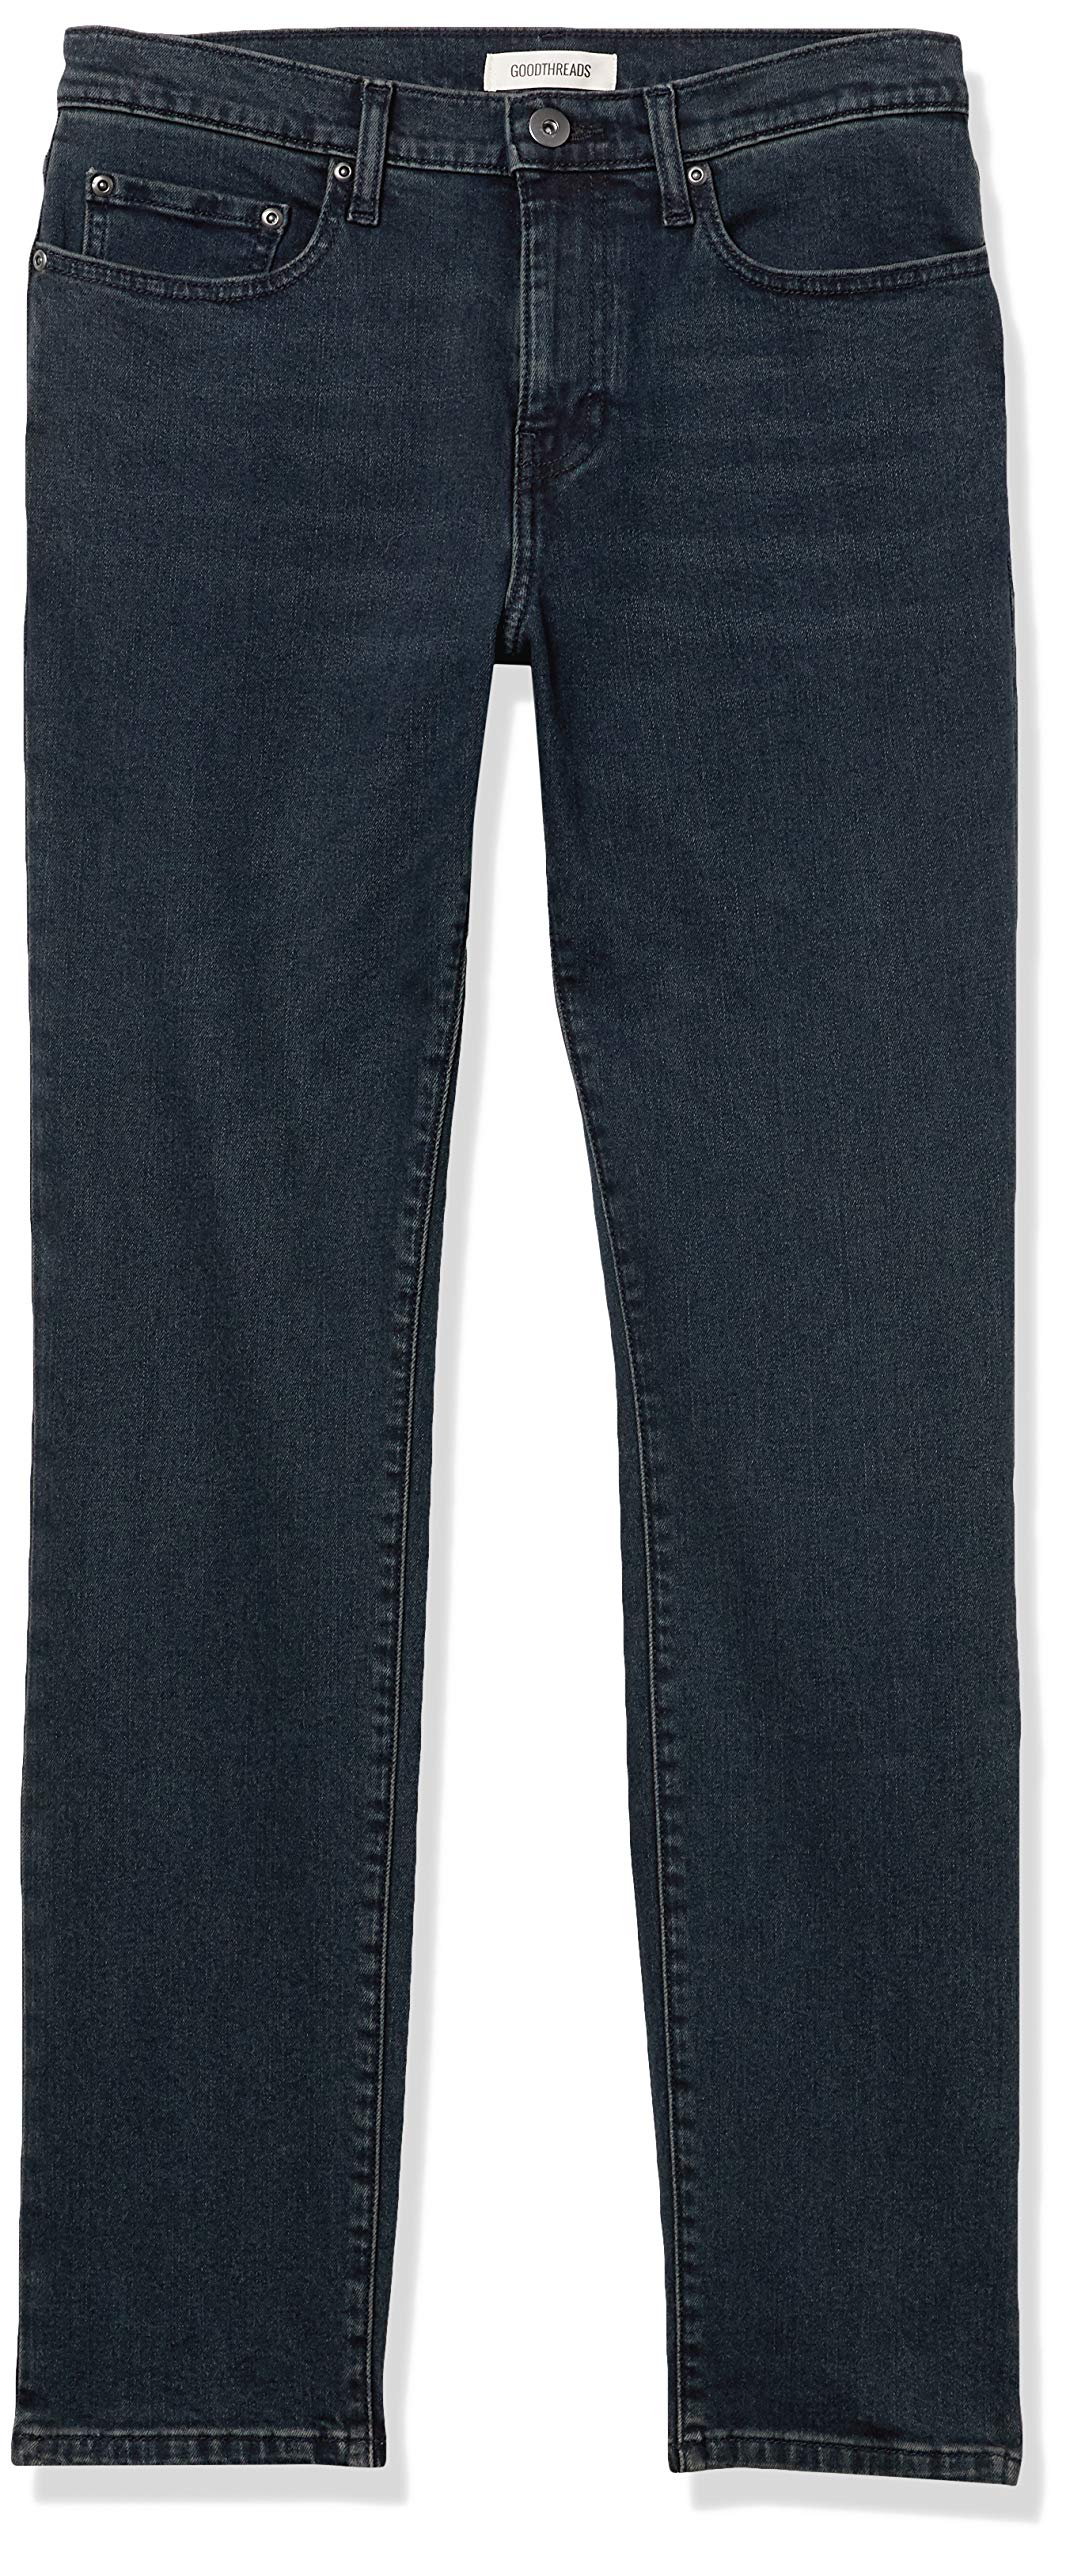 Amazon Essentials Men's Comfort Stretch Straight Slim-Fit Jean (Previously Goodthreads)